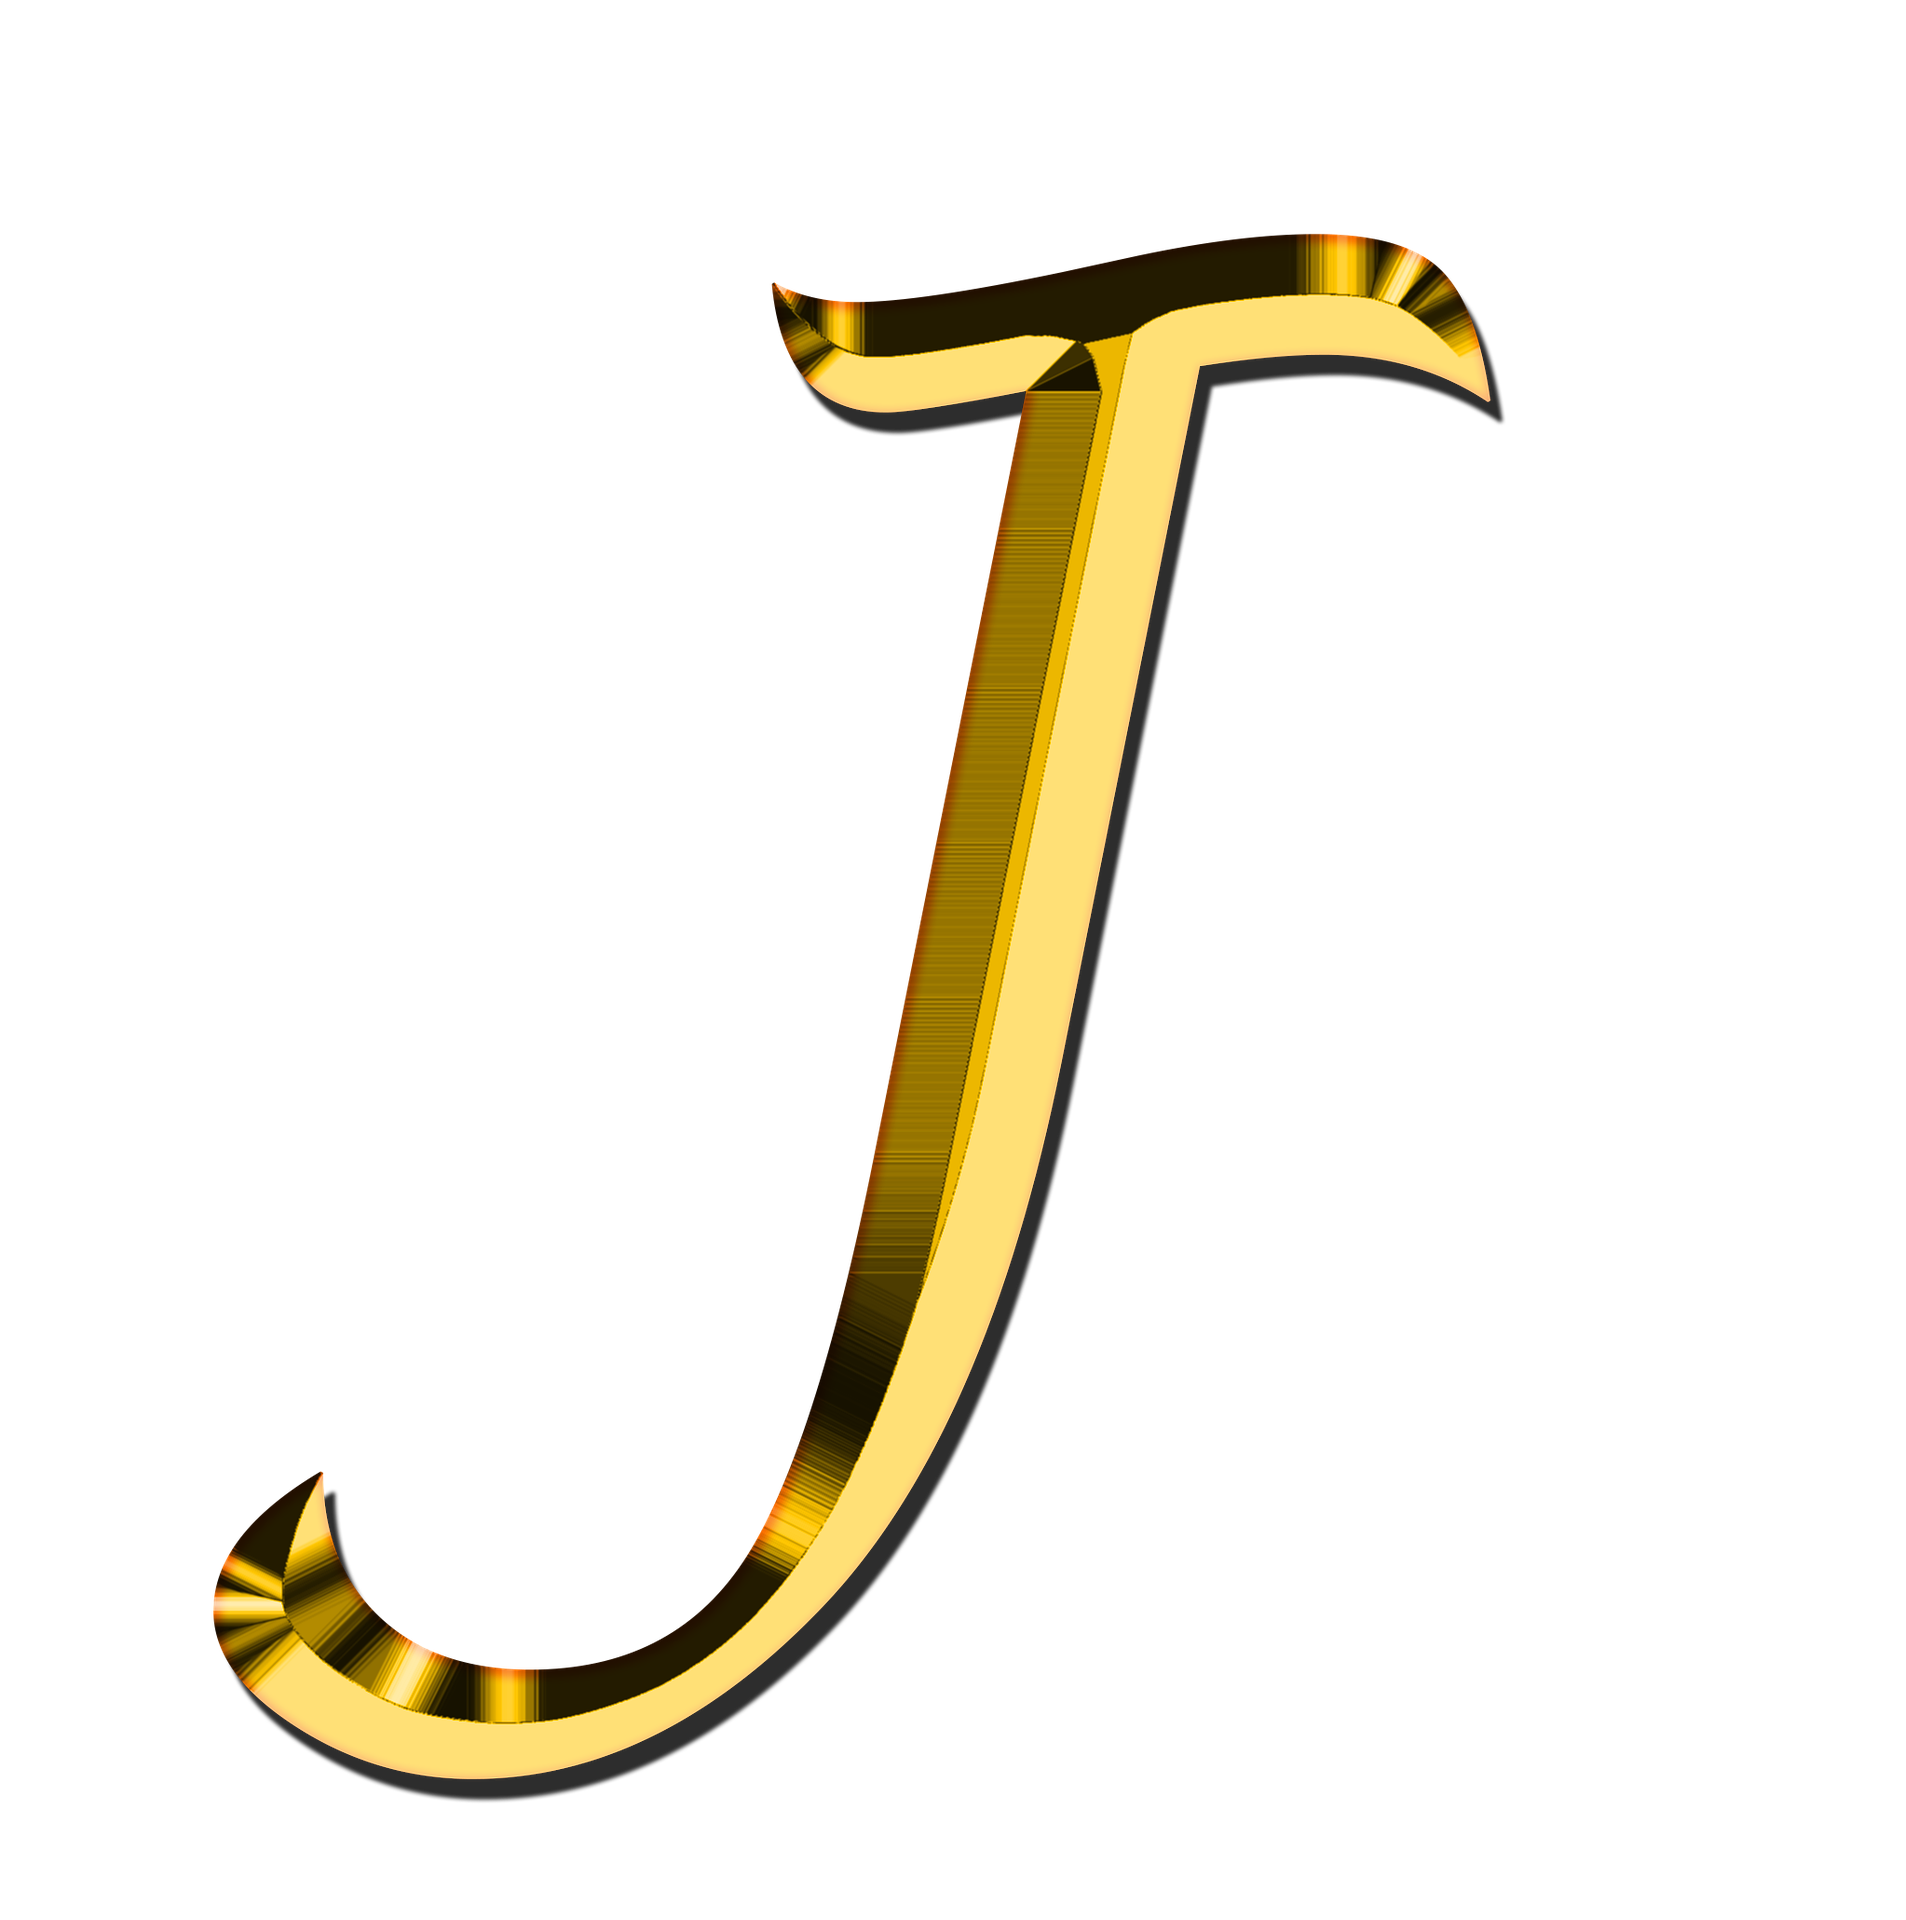 Jainco logo